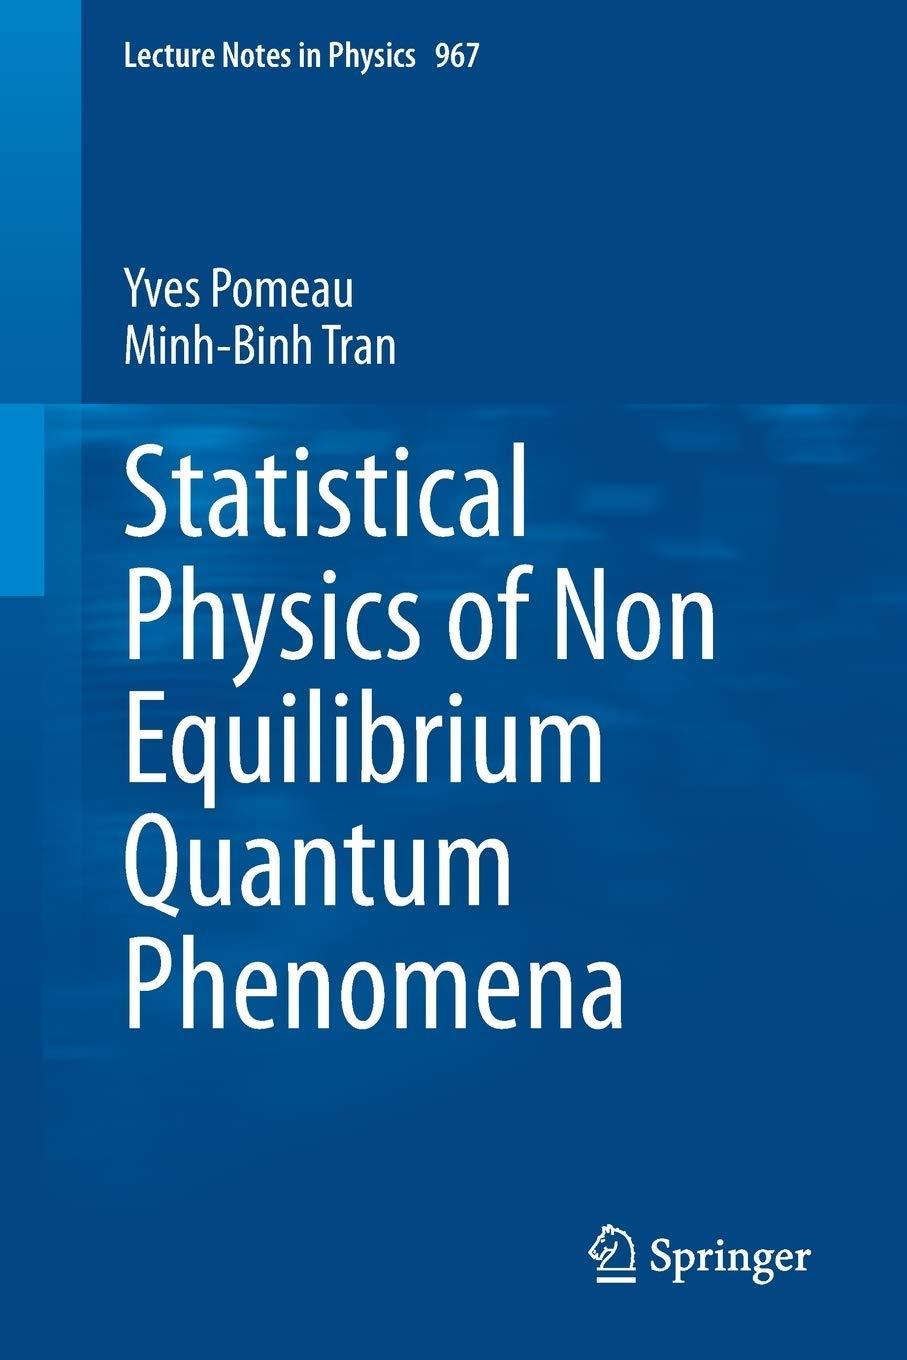 statistical physics of non equilibrium quantum phenomena 1st edition yves pomeau, minh-binh tran 3030343936,